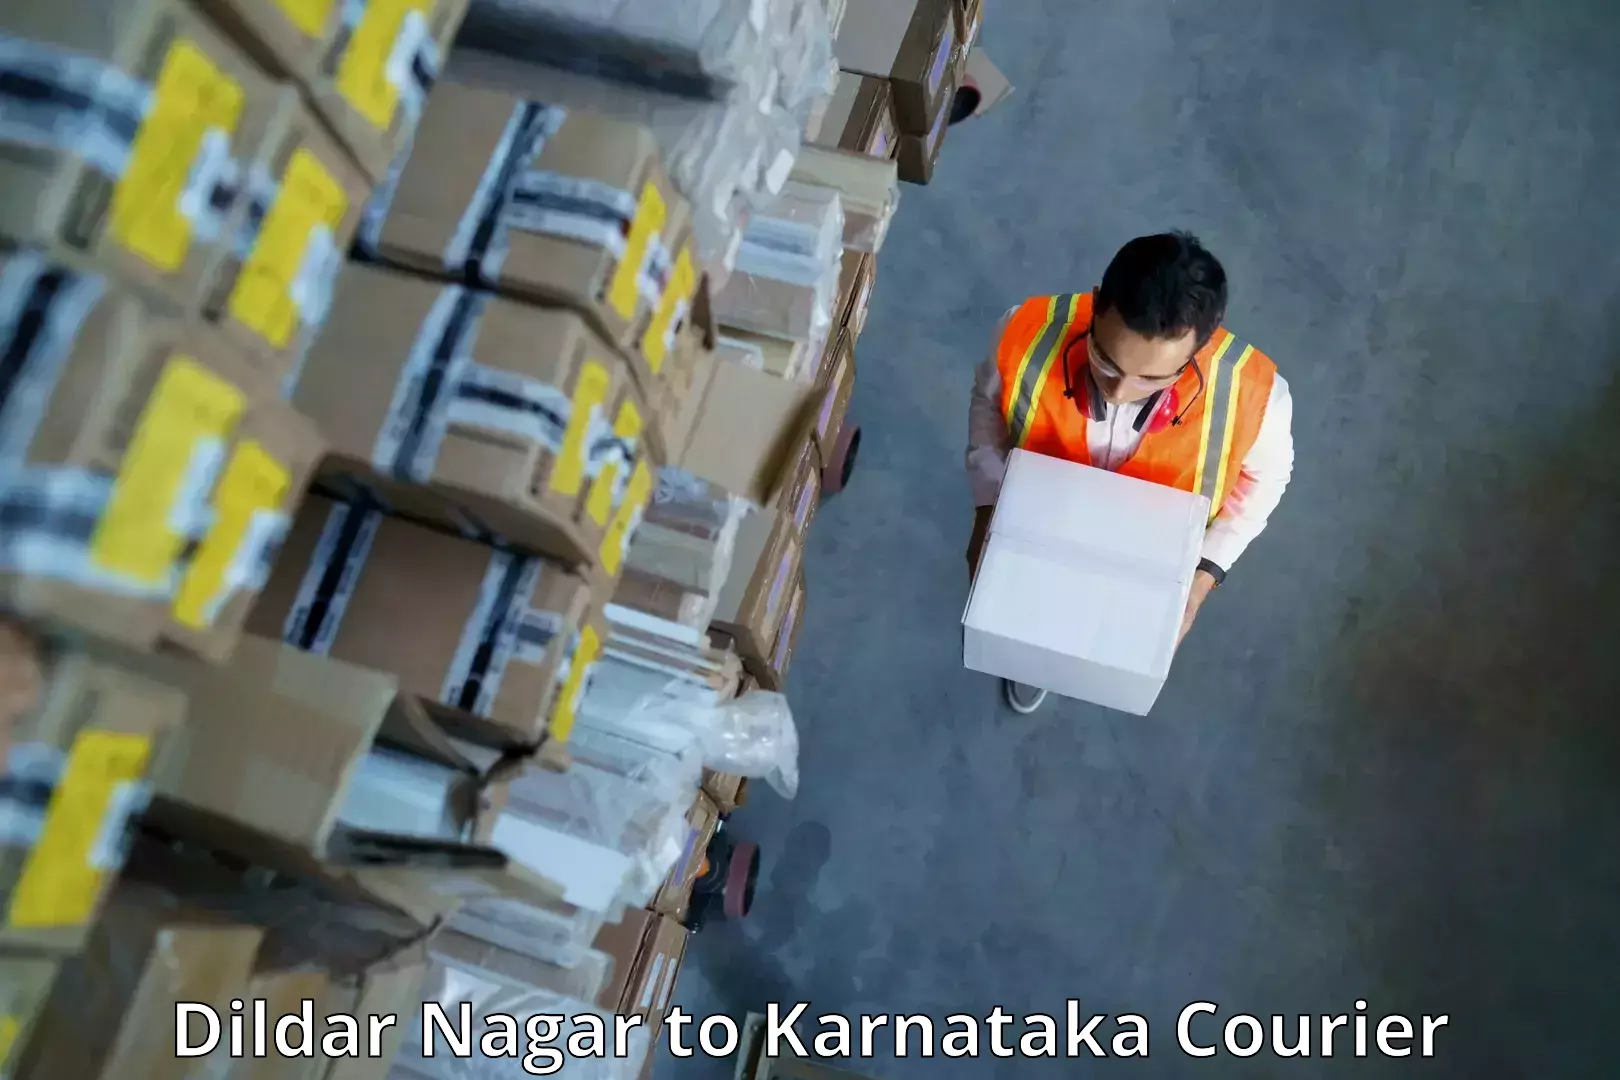 Reliable courier service Dildar Nagar to Karnataka